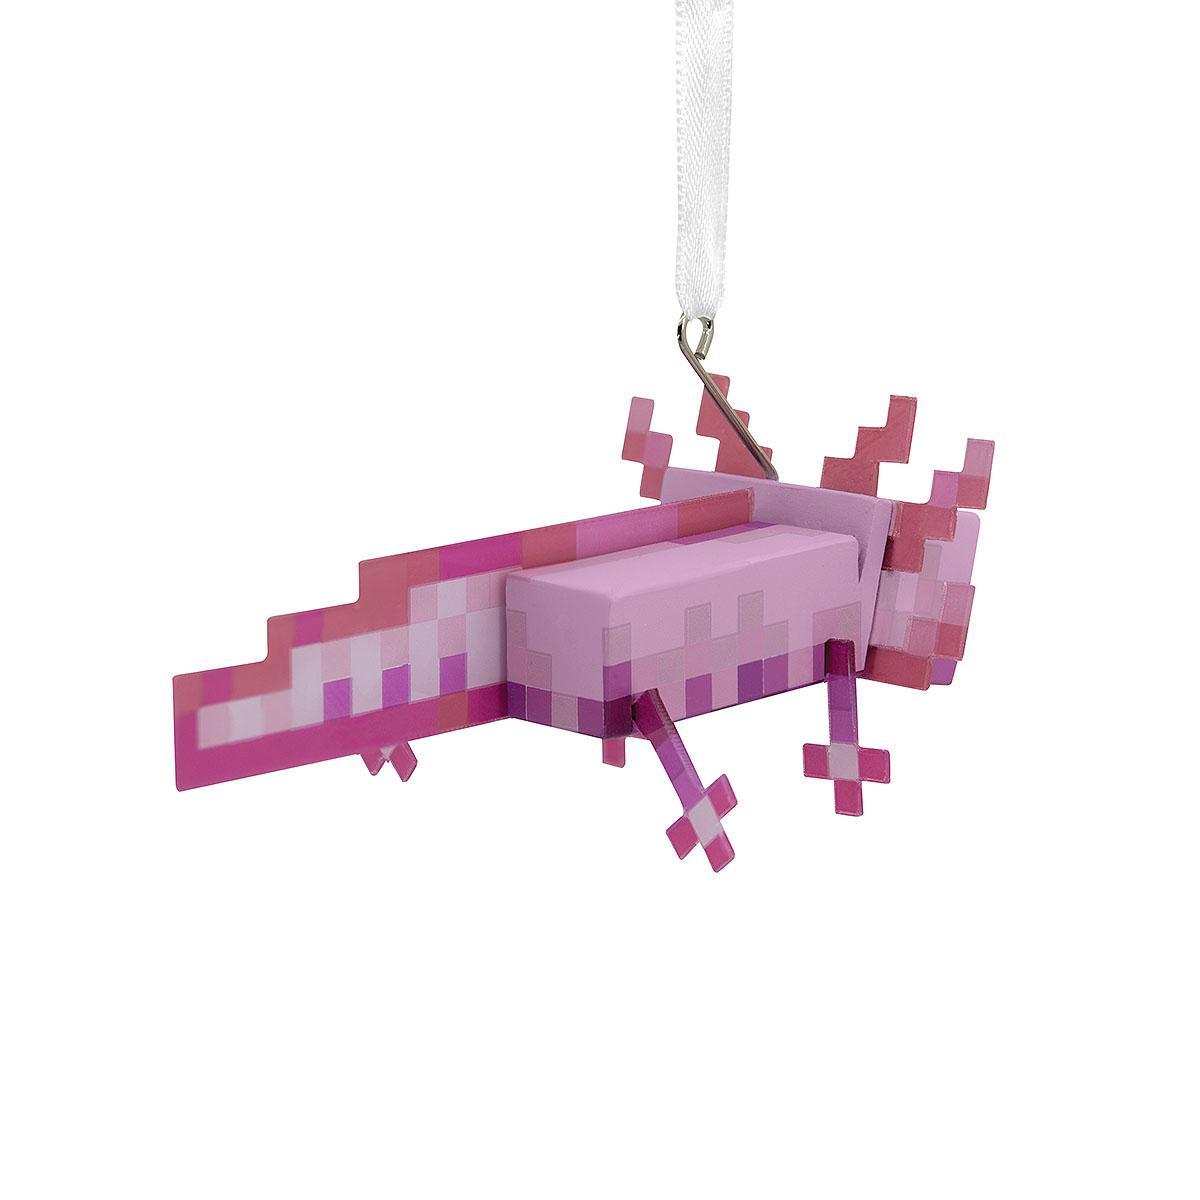 Hallmark Minecraft Axolotl